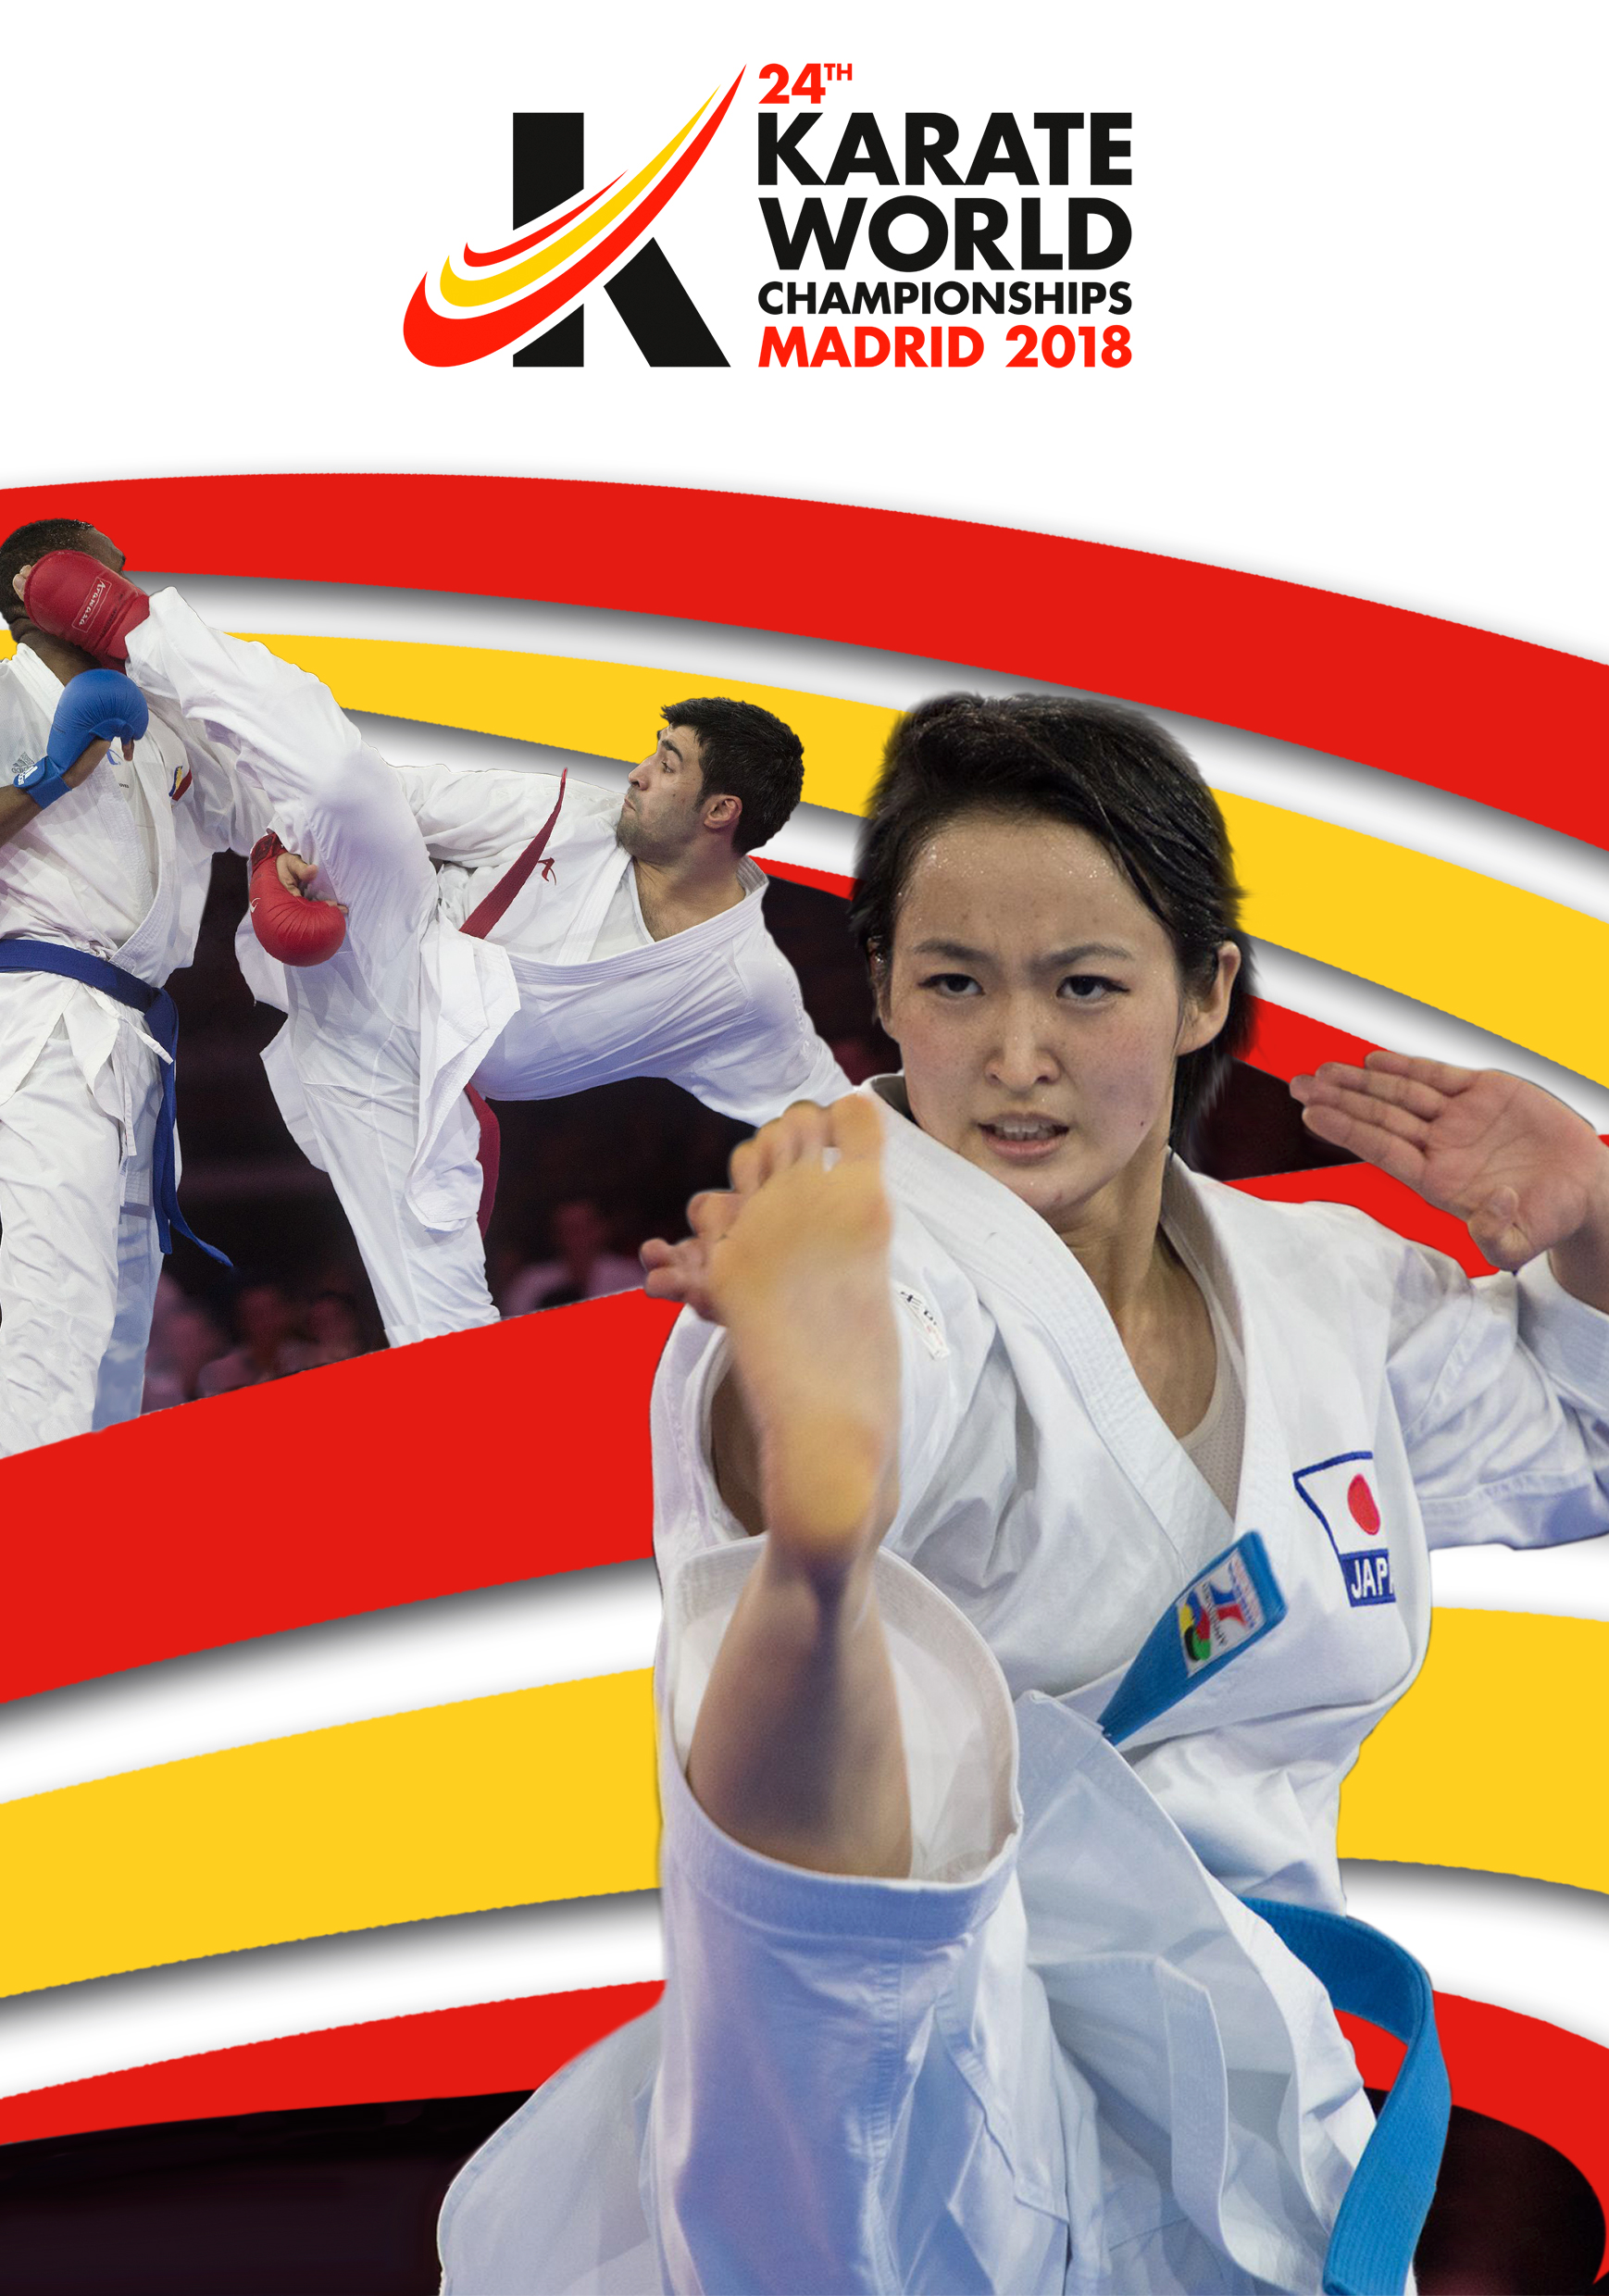 images/News_Karate/poster_karate2018.jpg